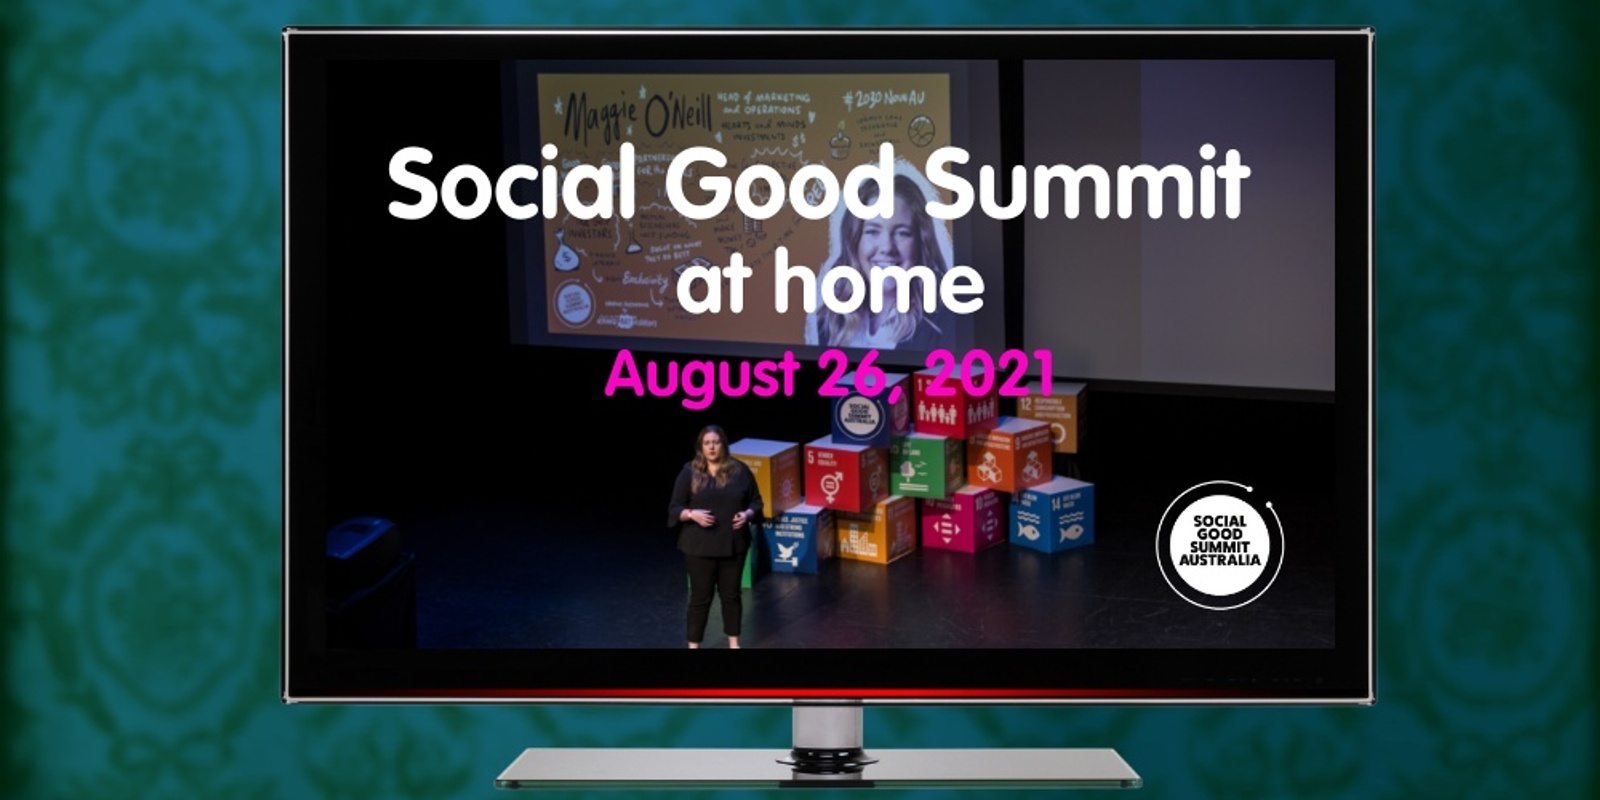 Social Good Summit Australia at home